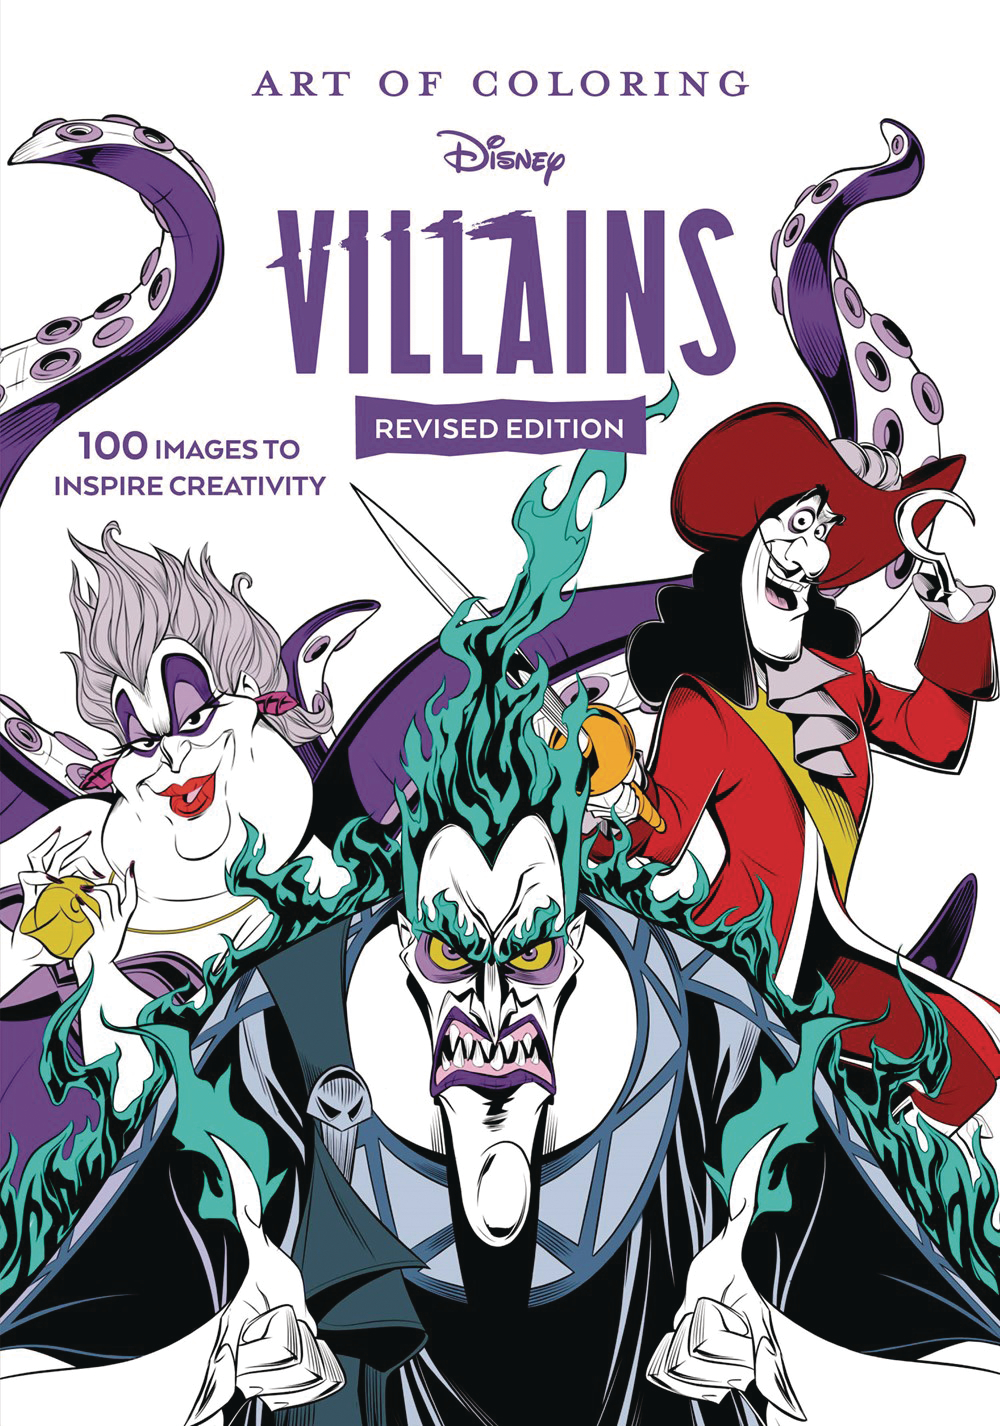 Art of Coloring Disney Villains Soft Cover